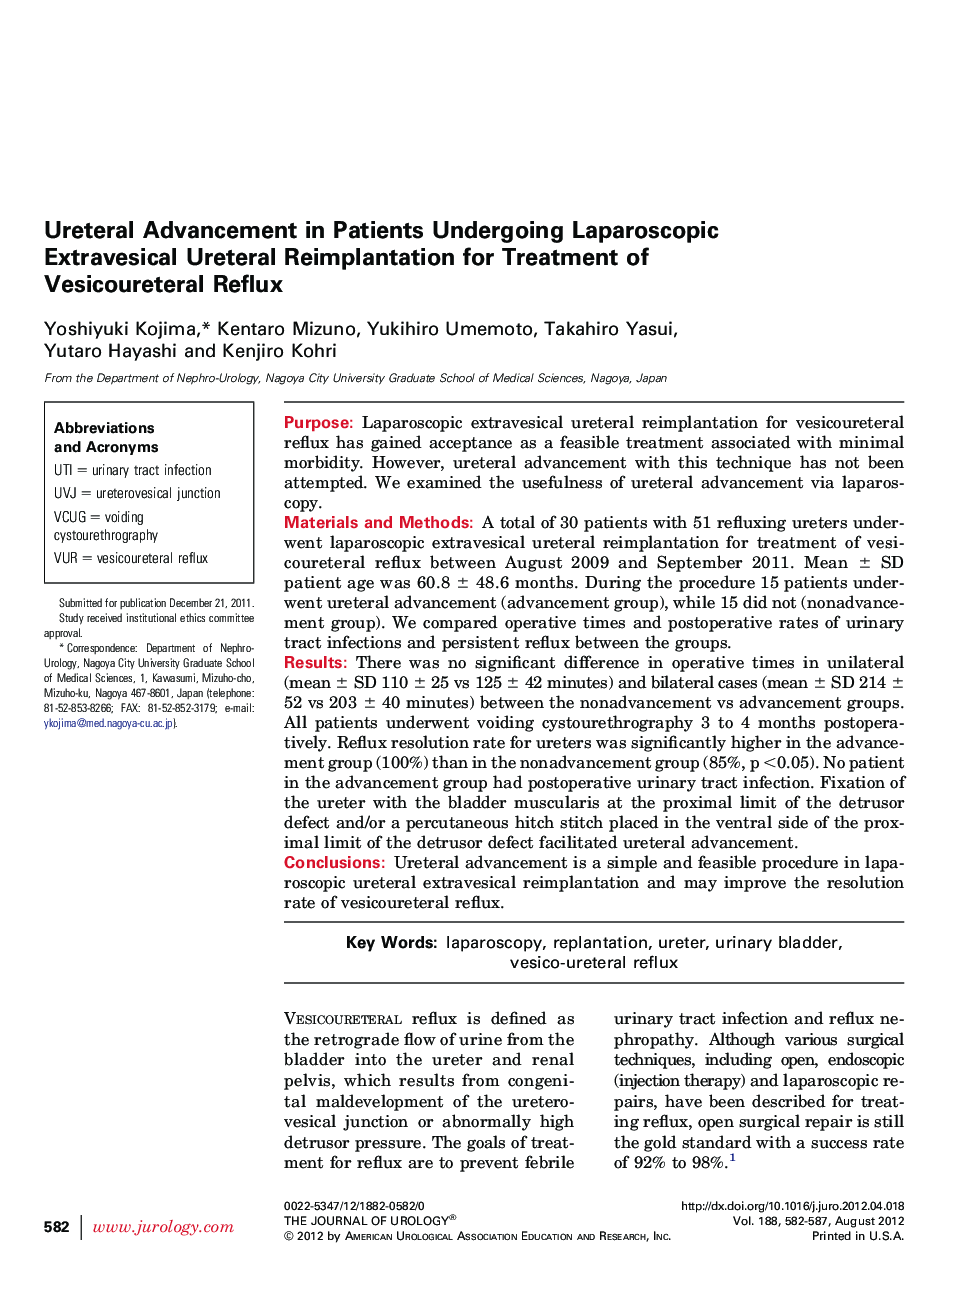 Ureteral Advancement in Patients Undergoing Laparoscopic Extravesical Ureteral Reimplantation for Treatment of Vesicoureteral Reflux 